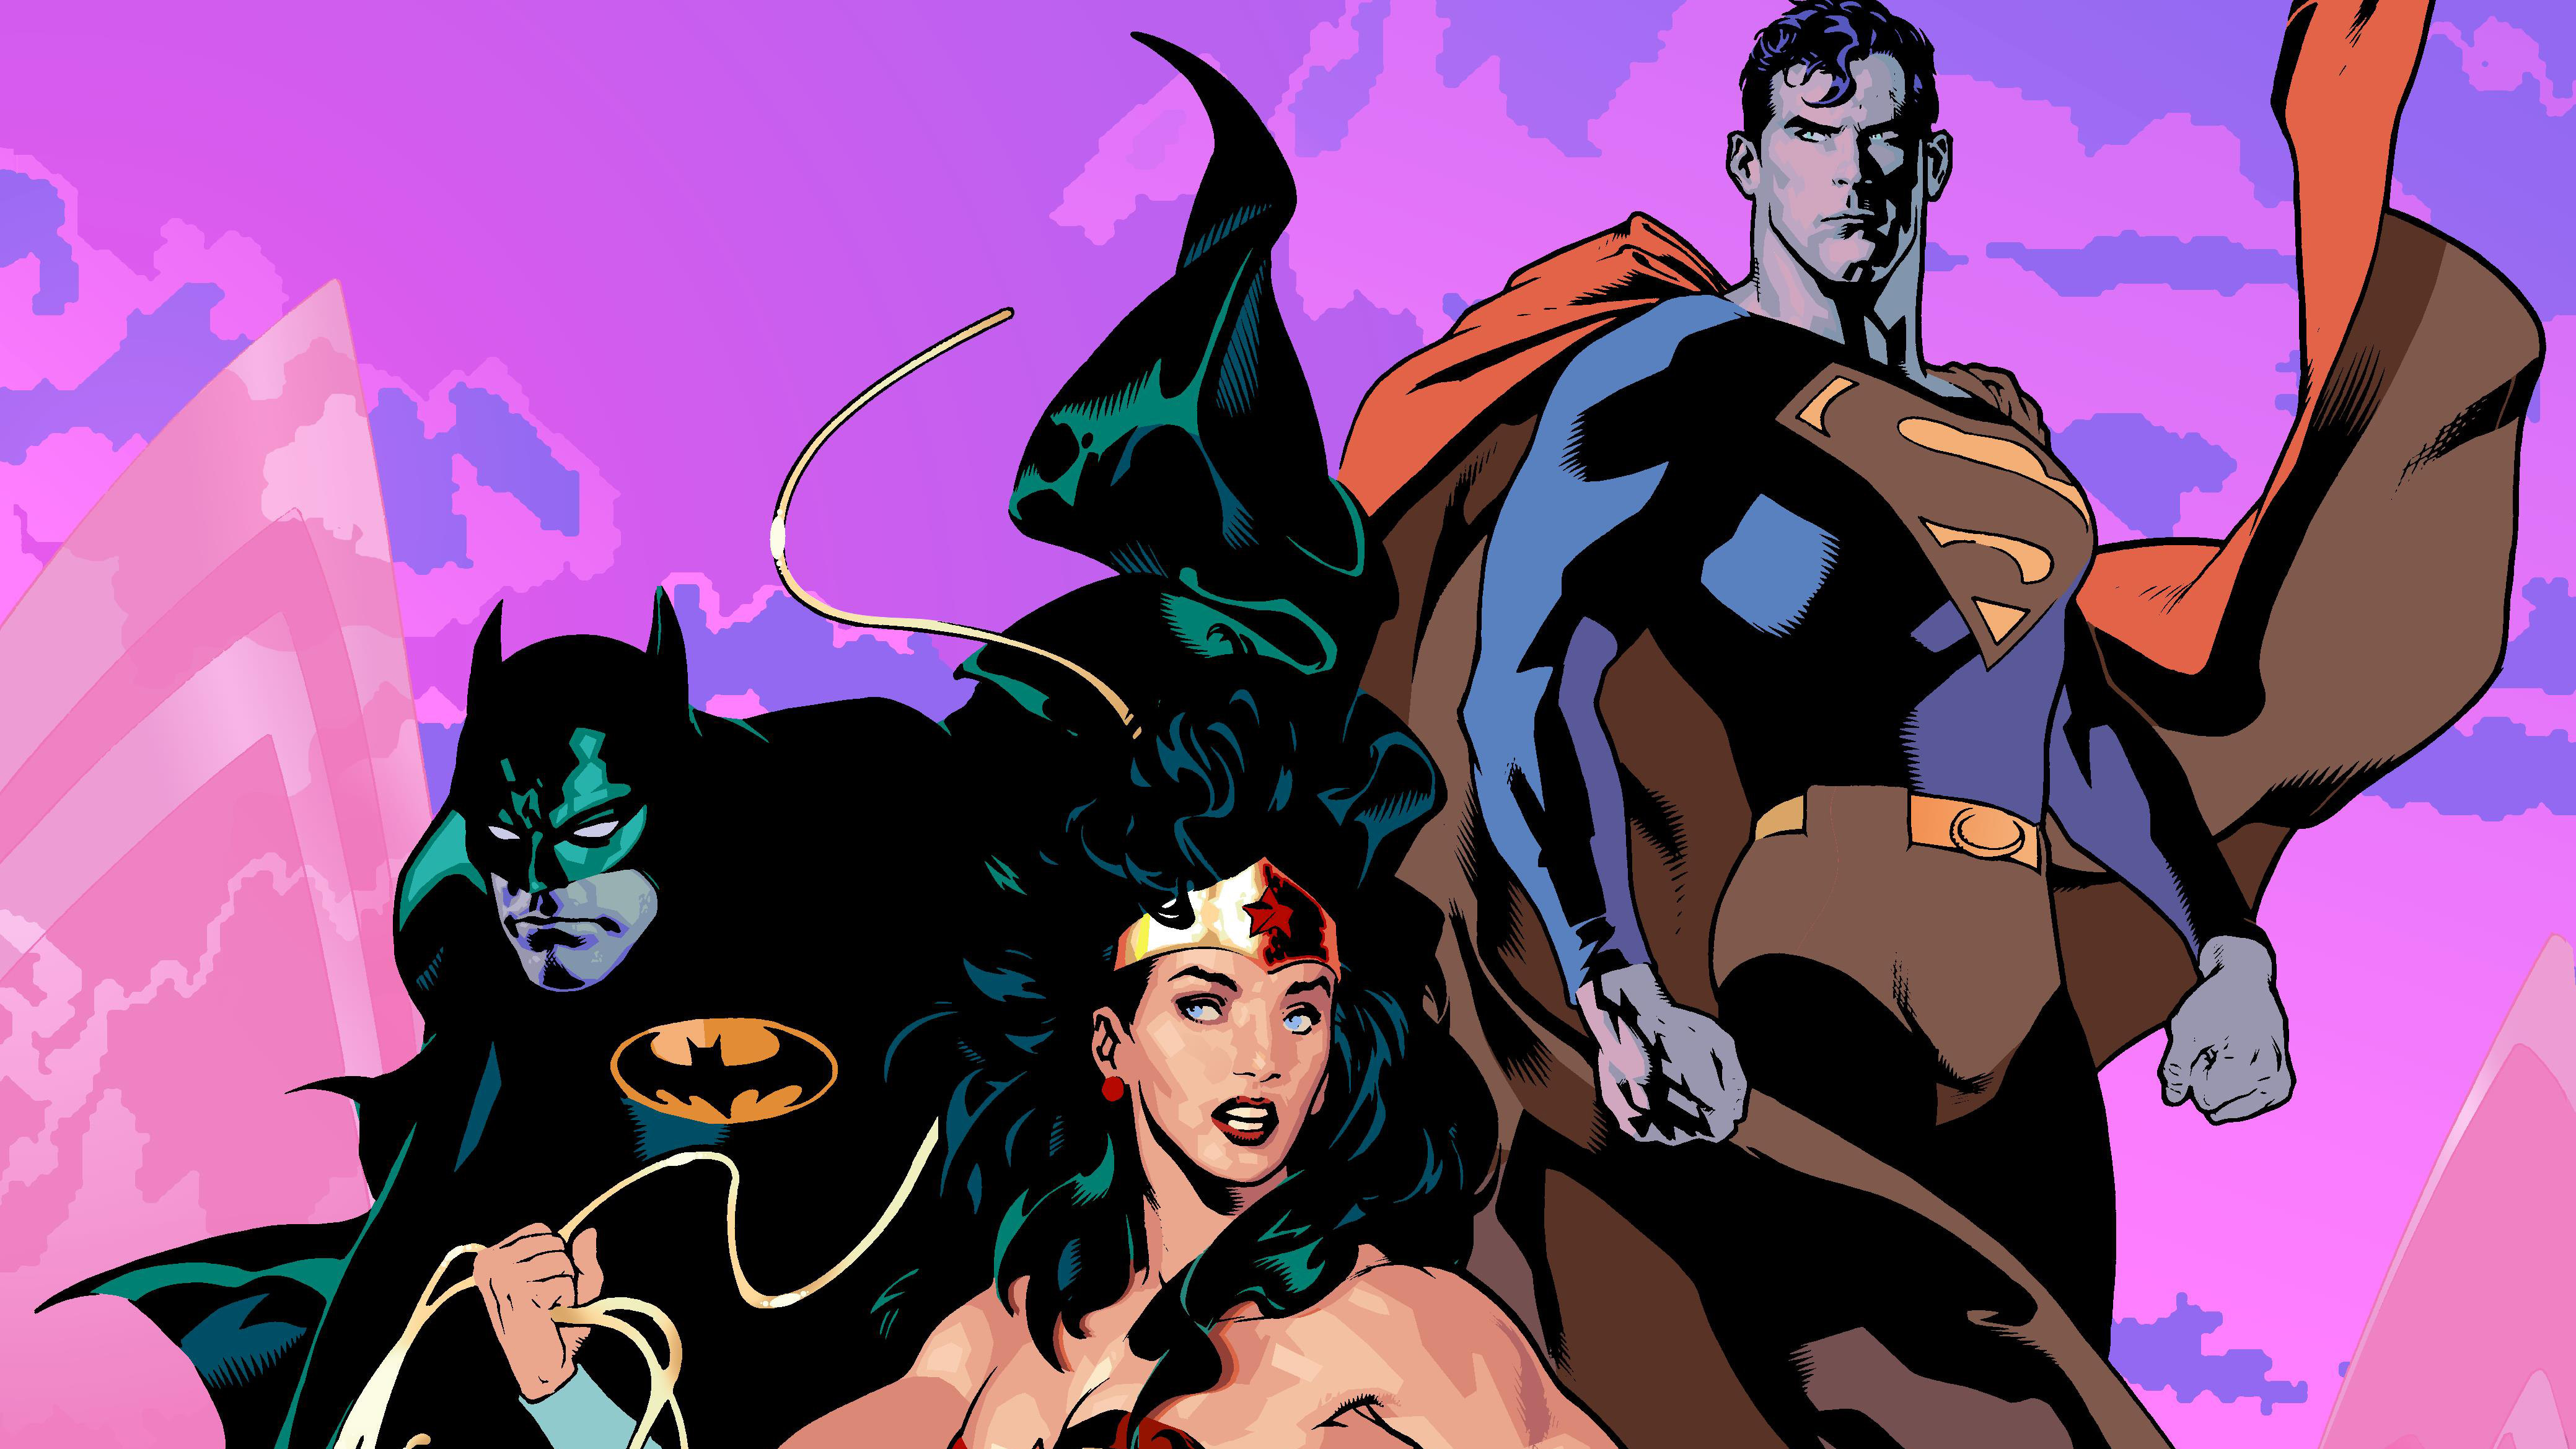 Nexus batman. Лига справедливости комикс. Бэтмен чудо женщина слияние арт. Обои на телефон Супергерои чудо женщина.